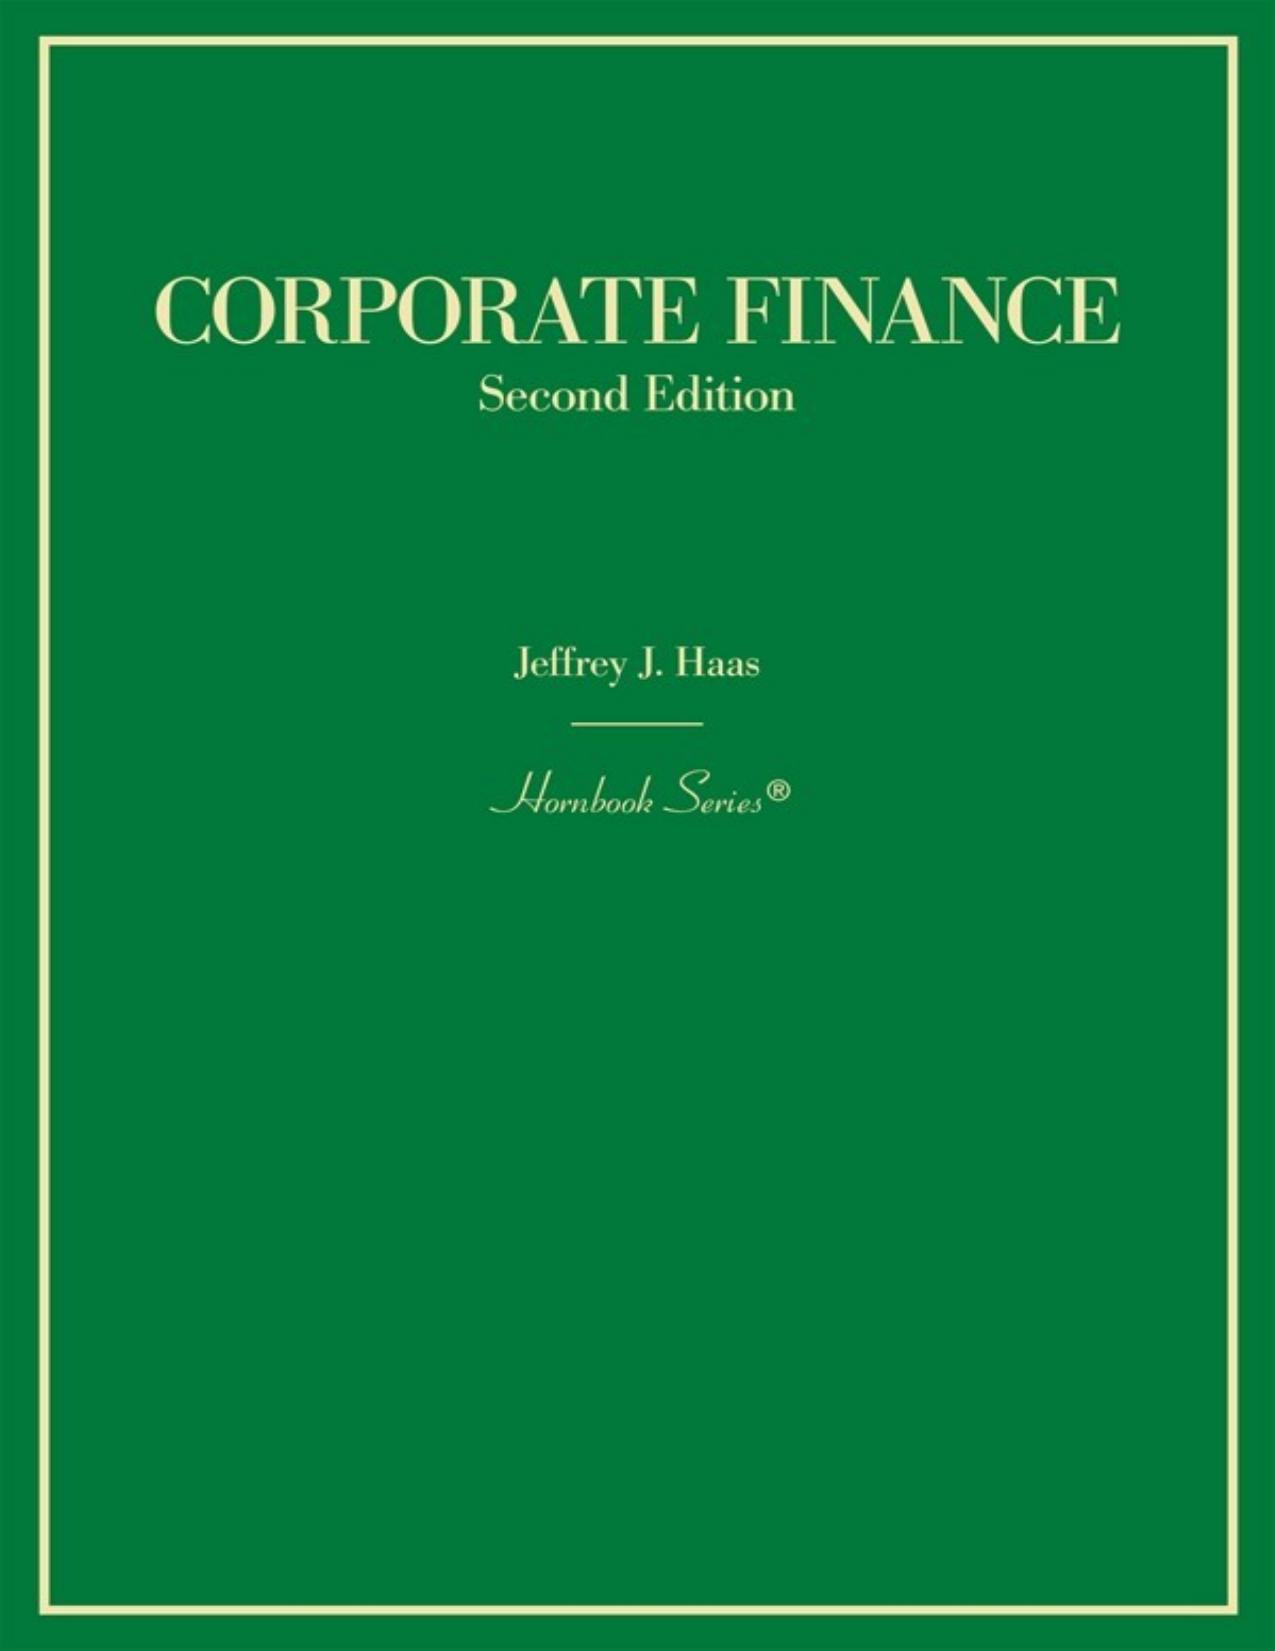 Corporate Finance (Hornbooks)  2nd Edition by Jeffrey J. Haas